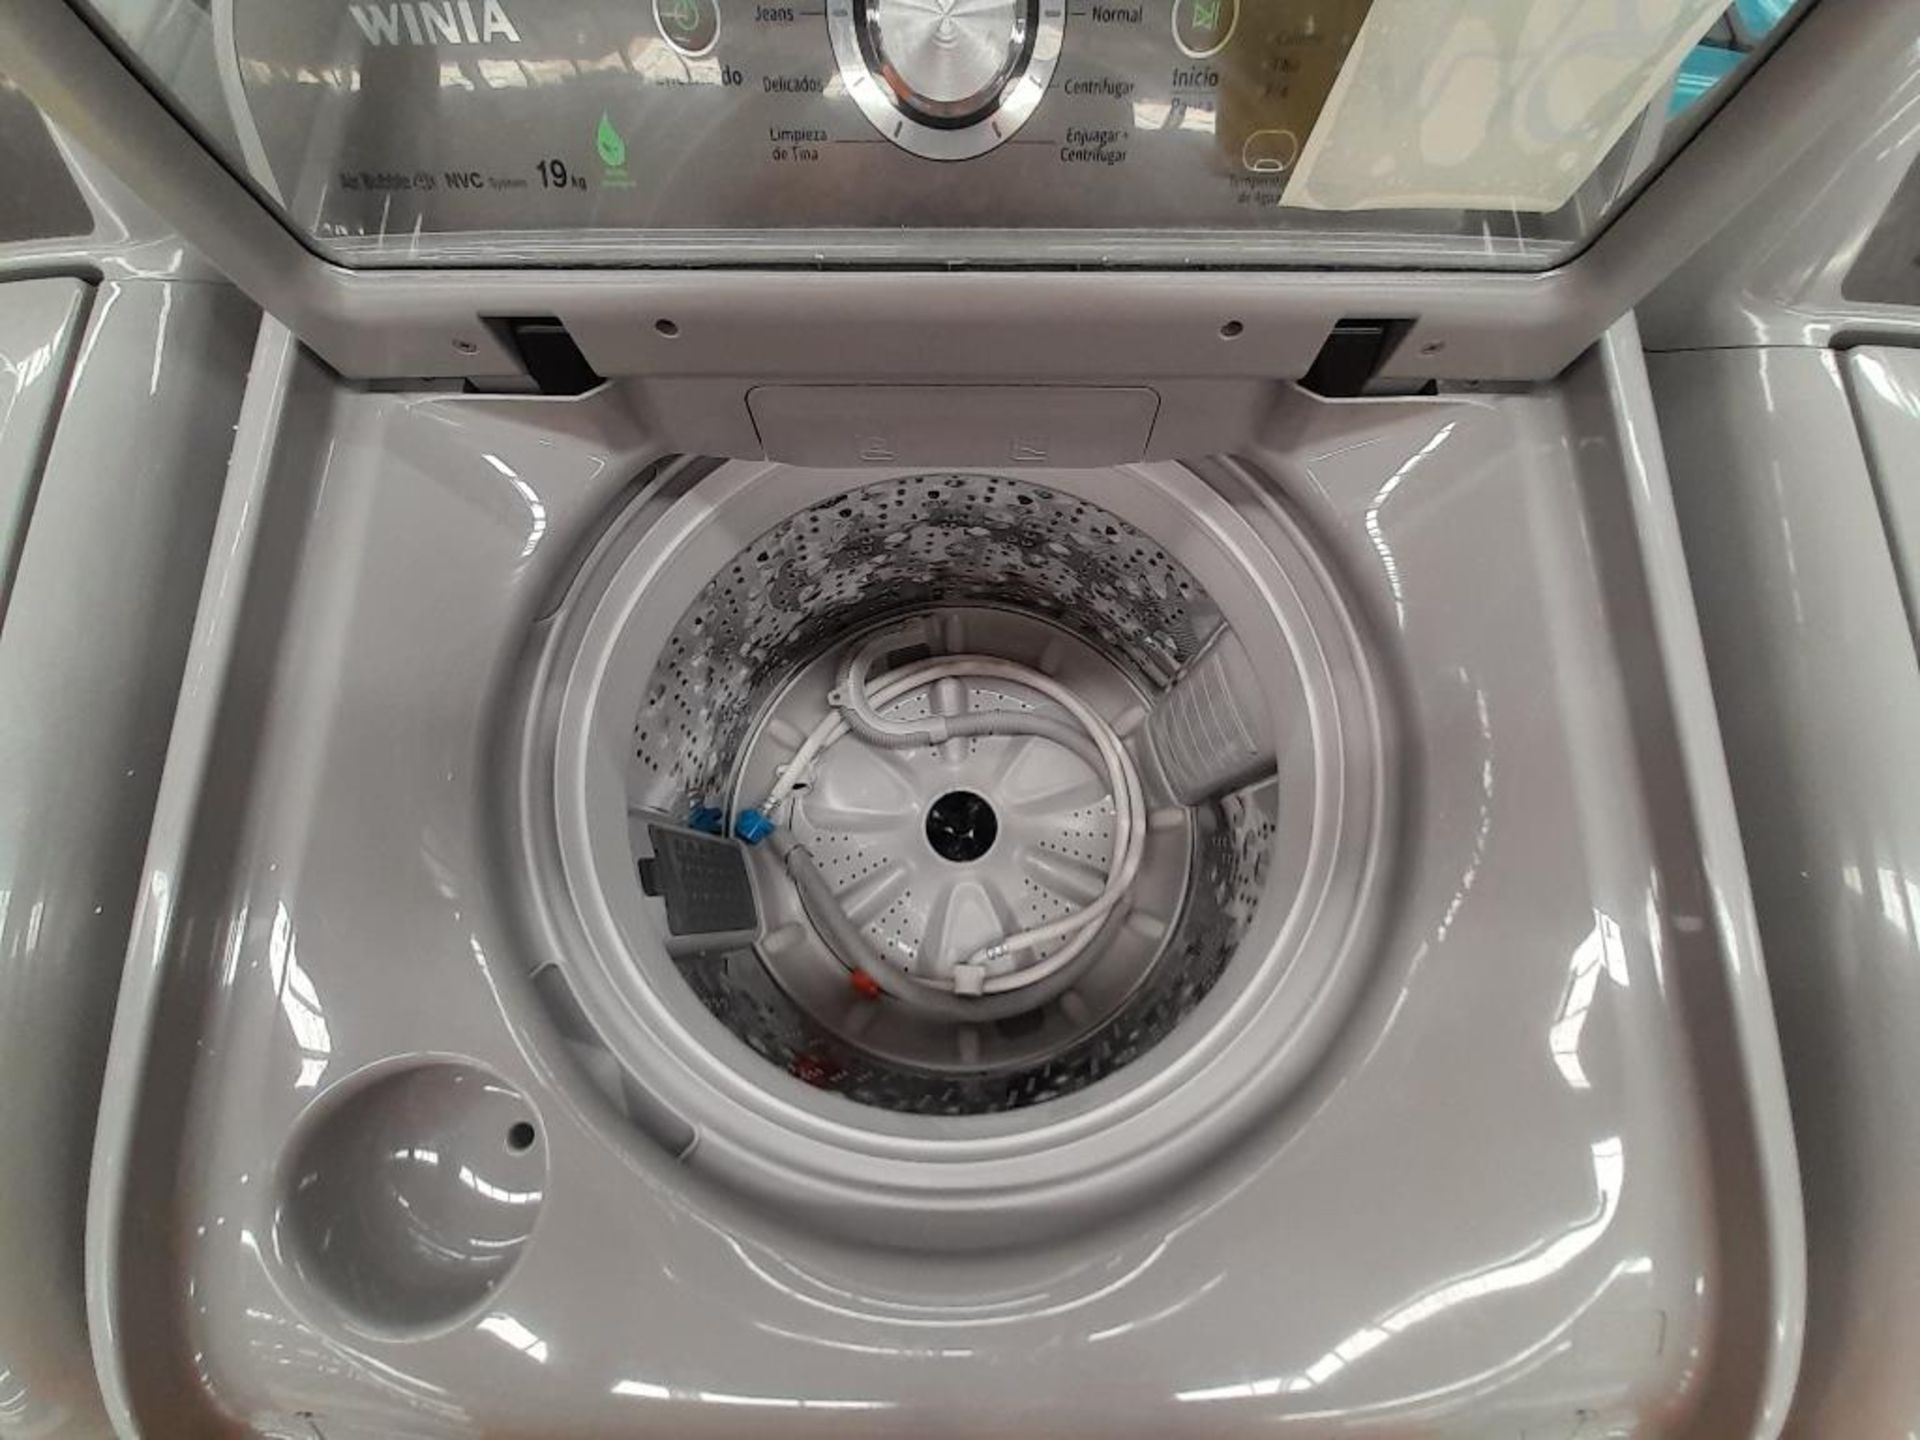 Lote de 2 lavadoras contiene: 1 lavadora de 19 KG Marca WINIA, Modelo DG1B386CWW1, Serie ND, Color - Image 4 of 6